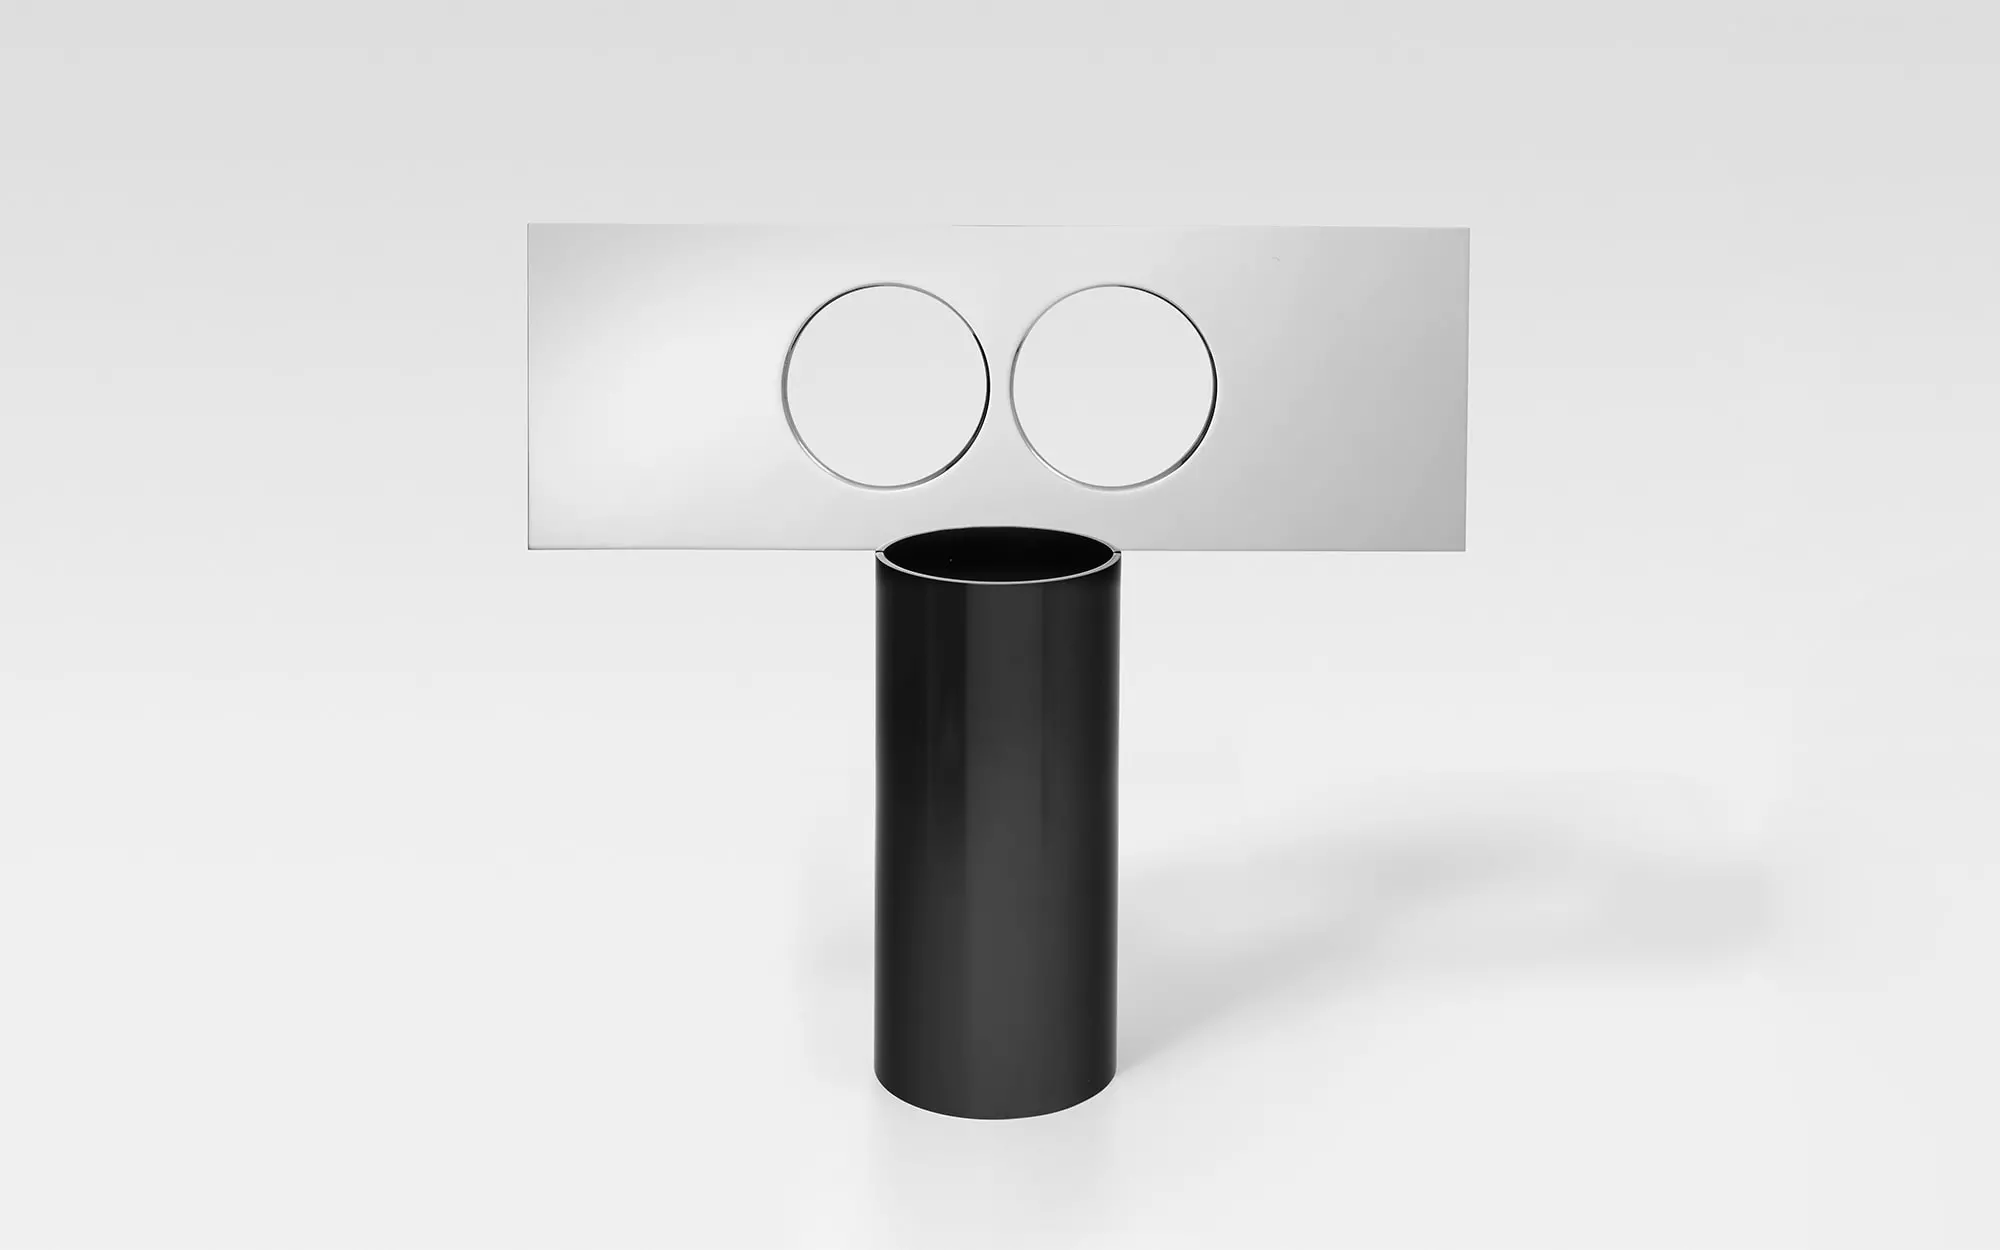 Lunettes - 2 Vase - Pierre Charpin - Design Miami / Basel 2021.